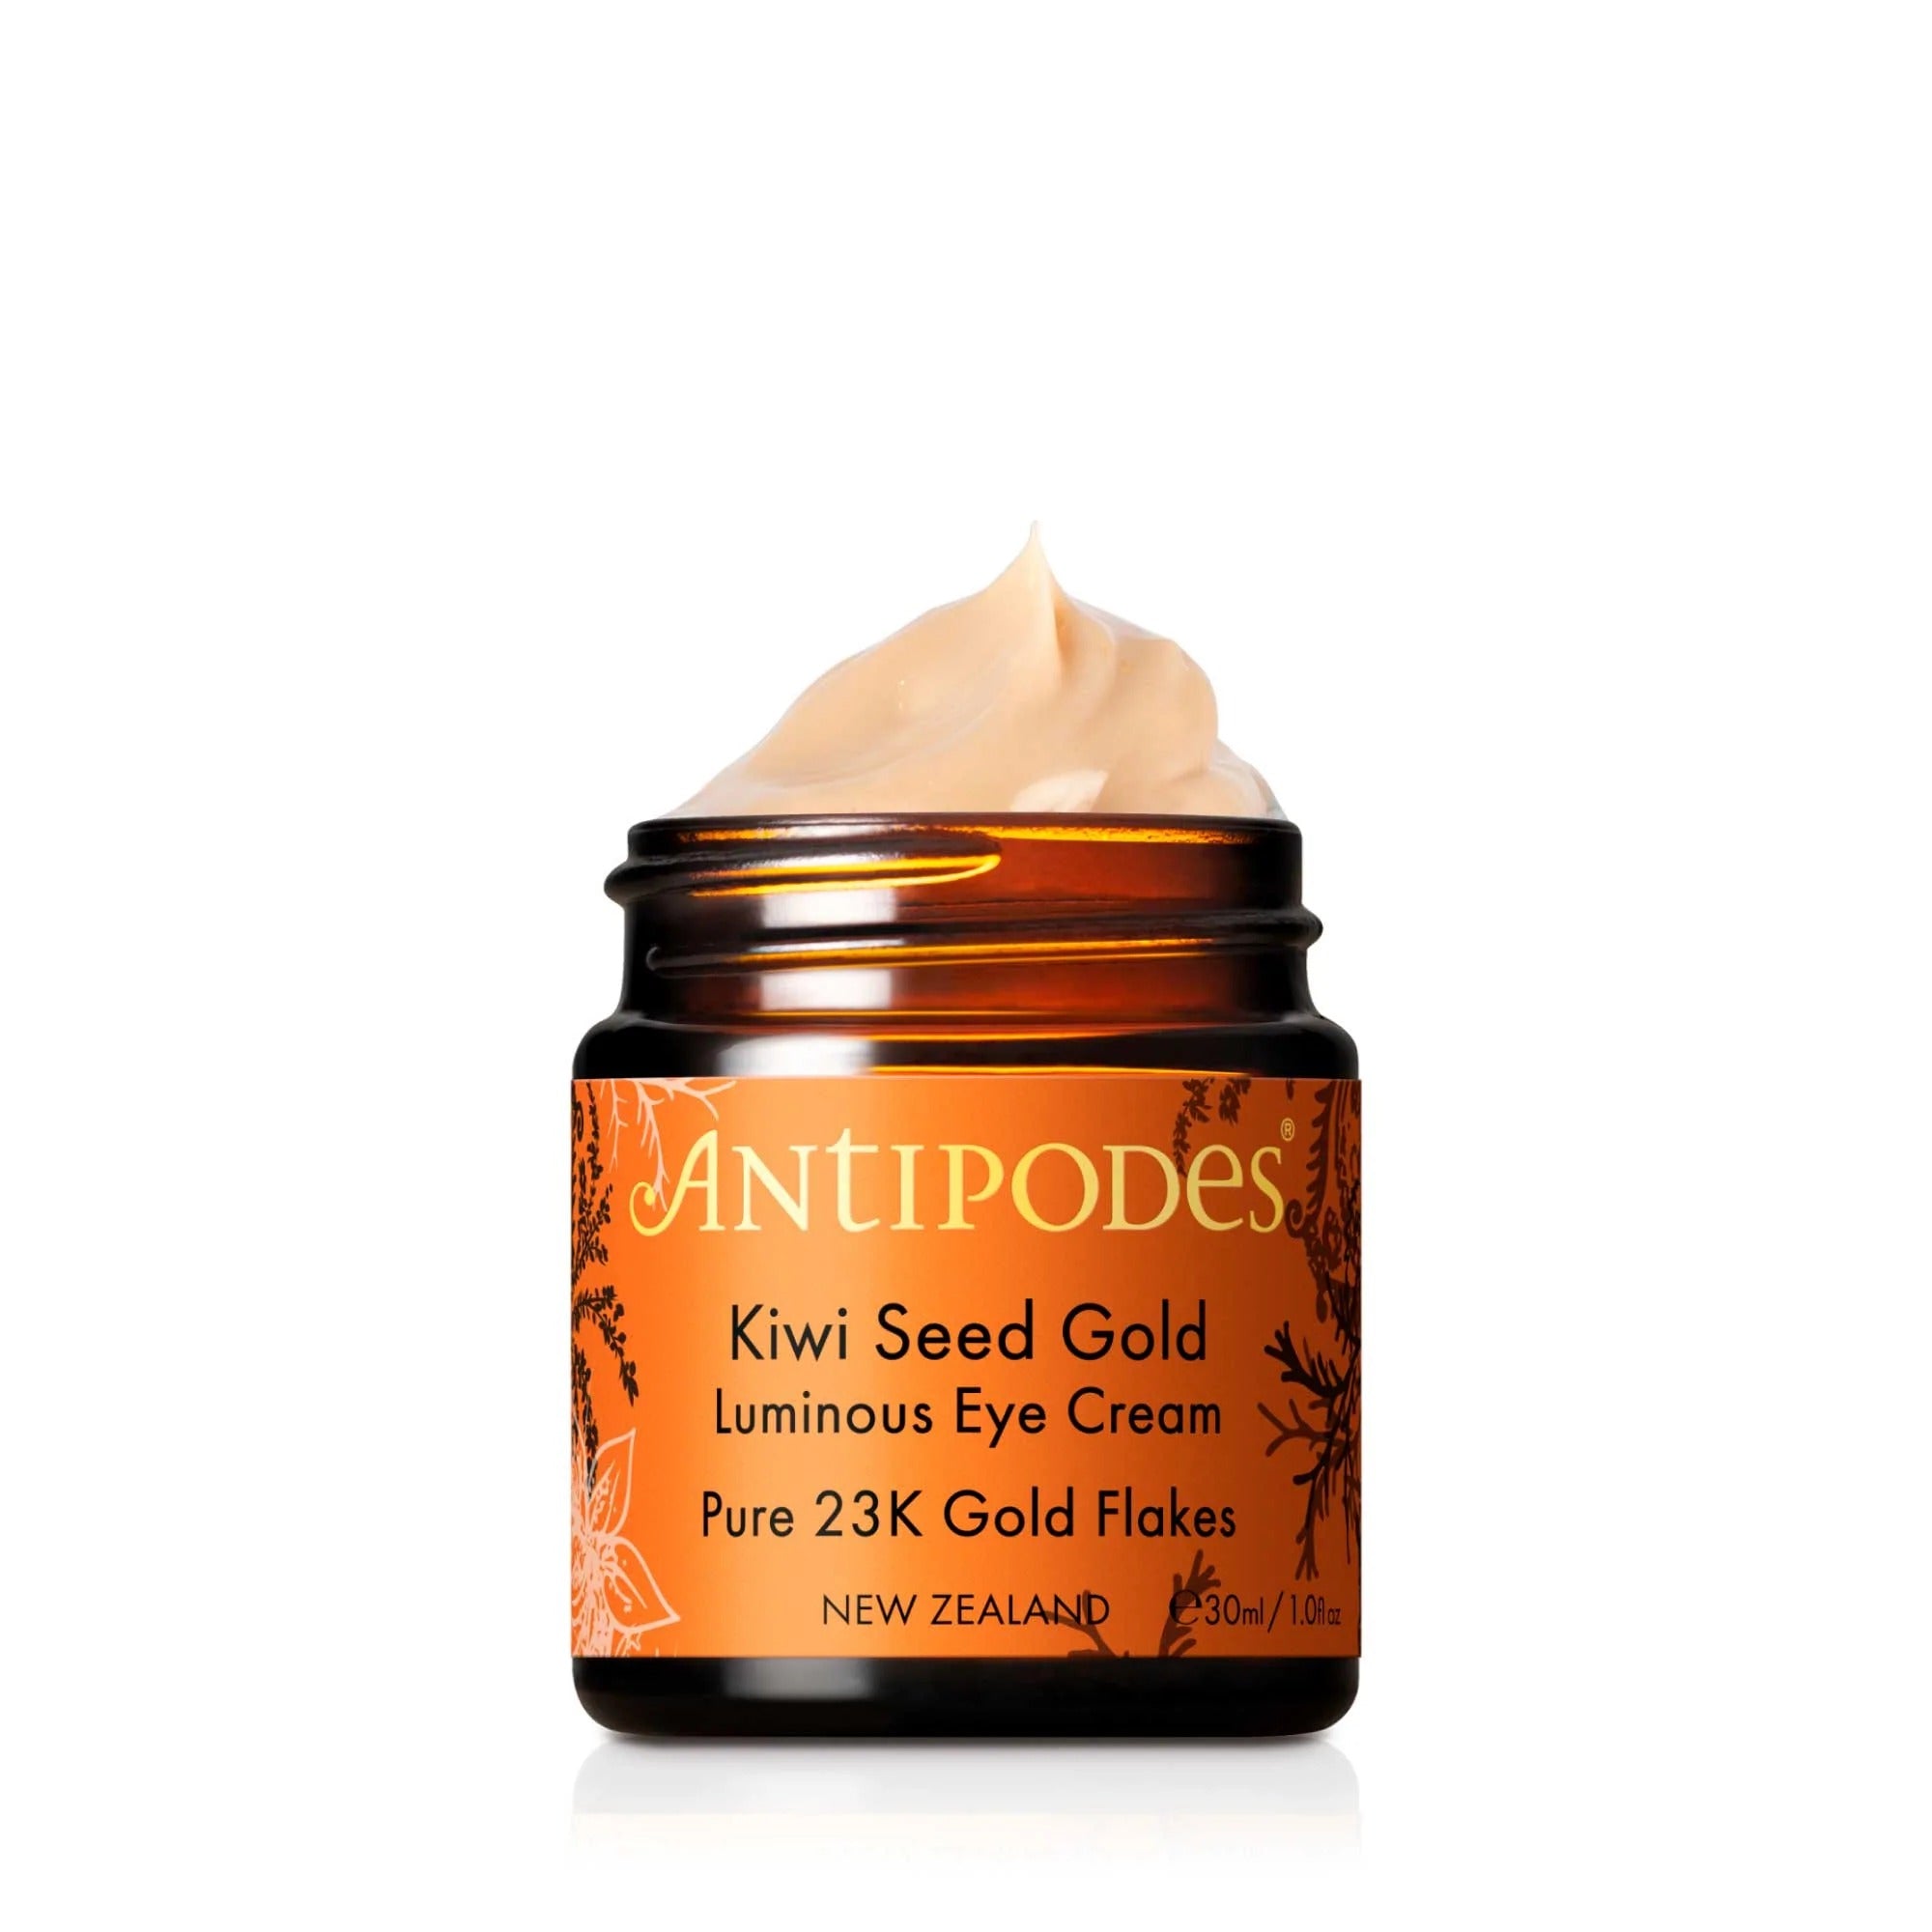 Antipodes - Kiwi Seed Gold Luminous Eye Cream (Pure 23K Gold Flakes) 奇異果籽眼霜 (23K金片) 30ml Mode De Vie Mall